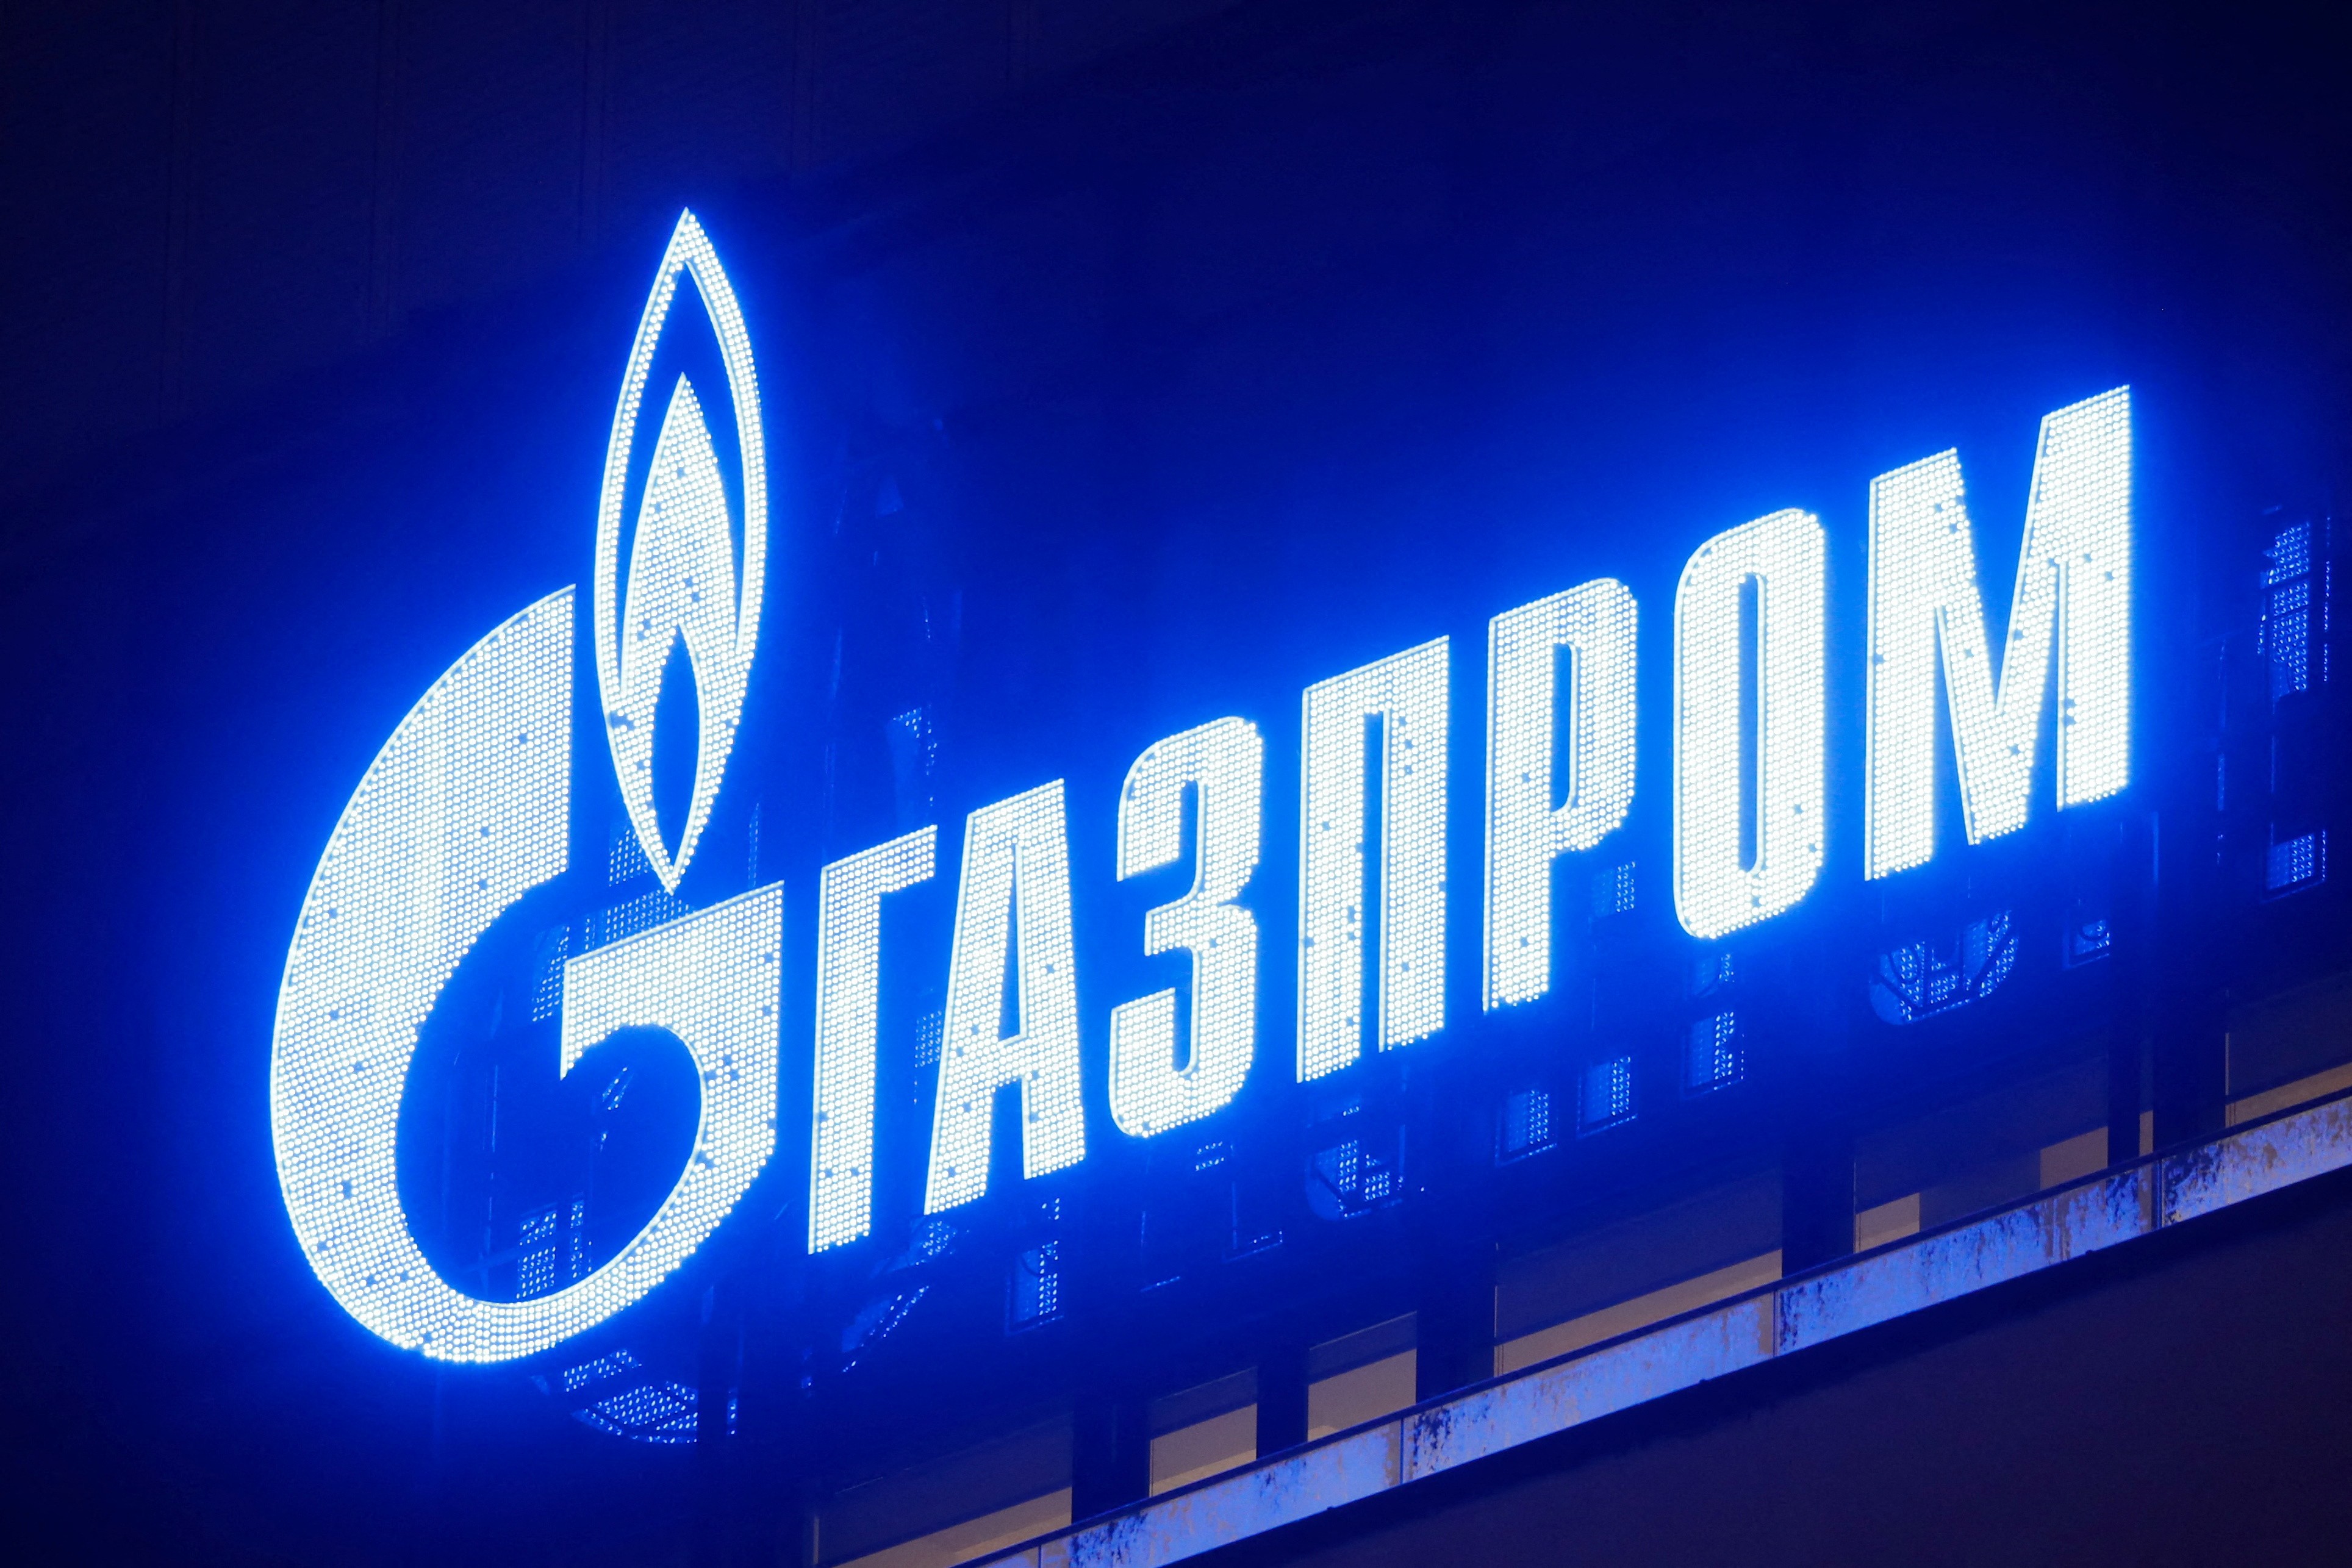 Bulgaria Might File A Claim Against Gazprom